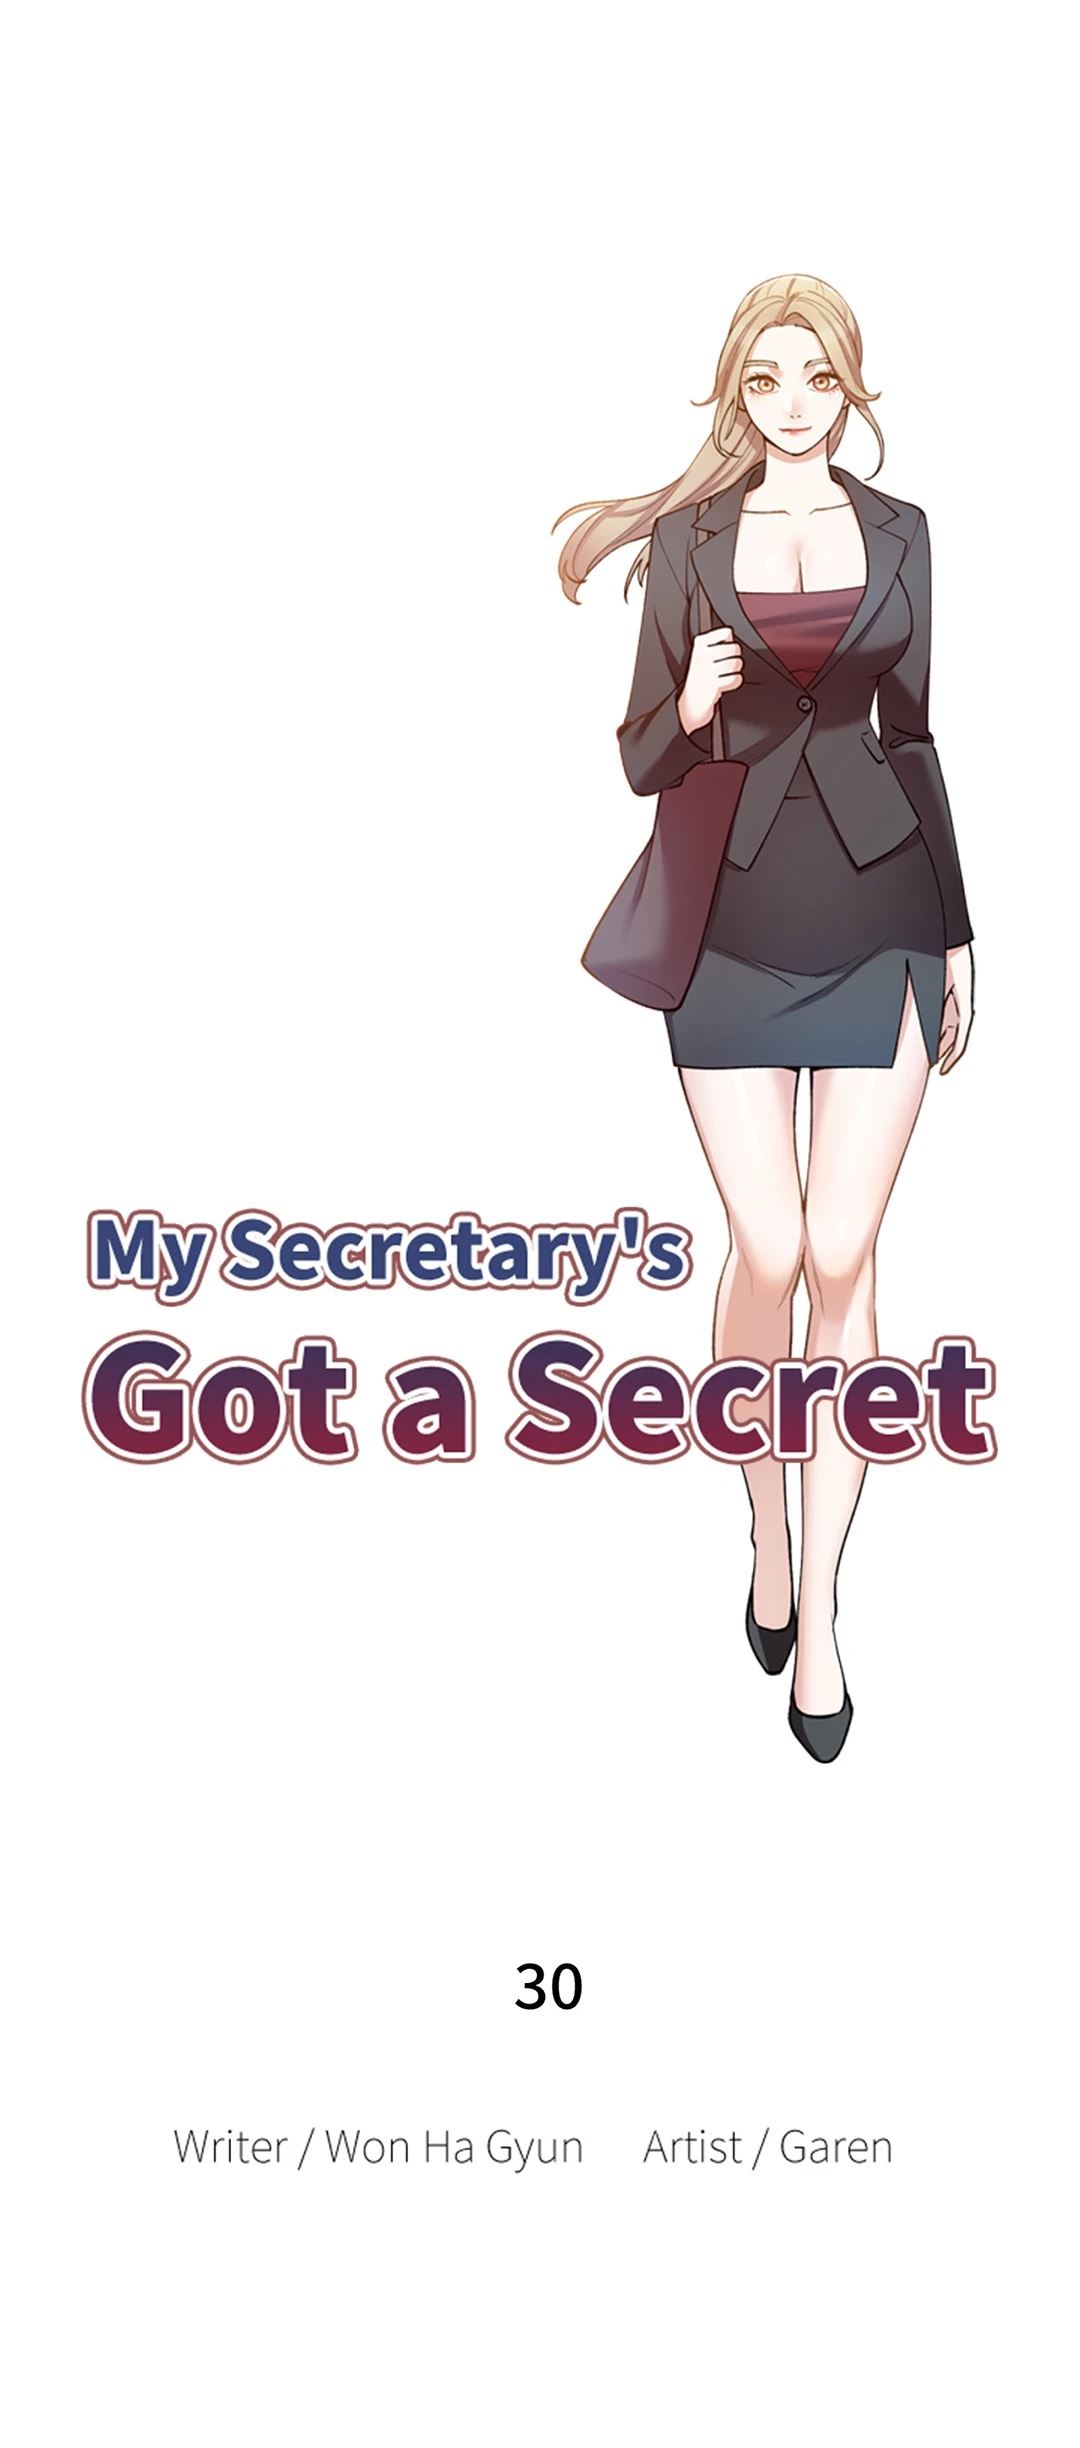 My Secretary’s Got a Secret image